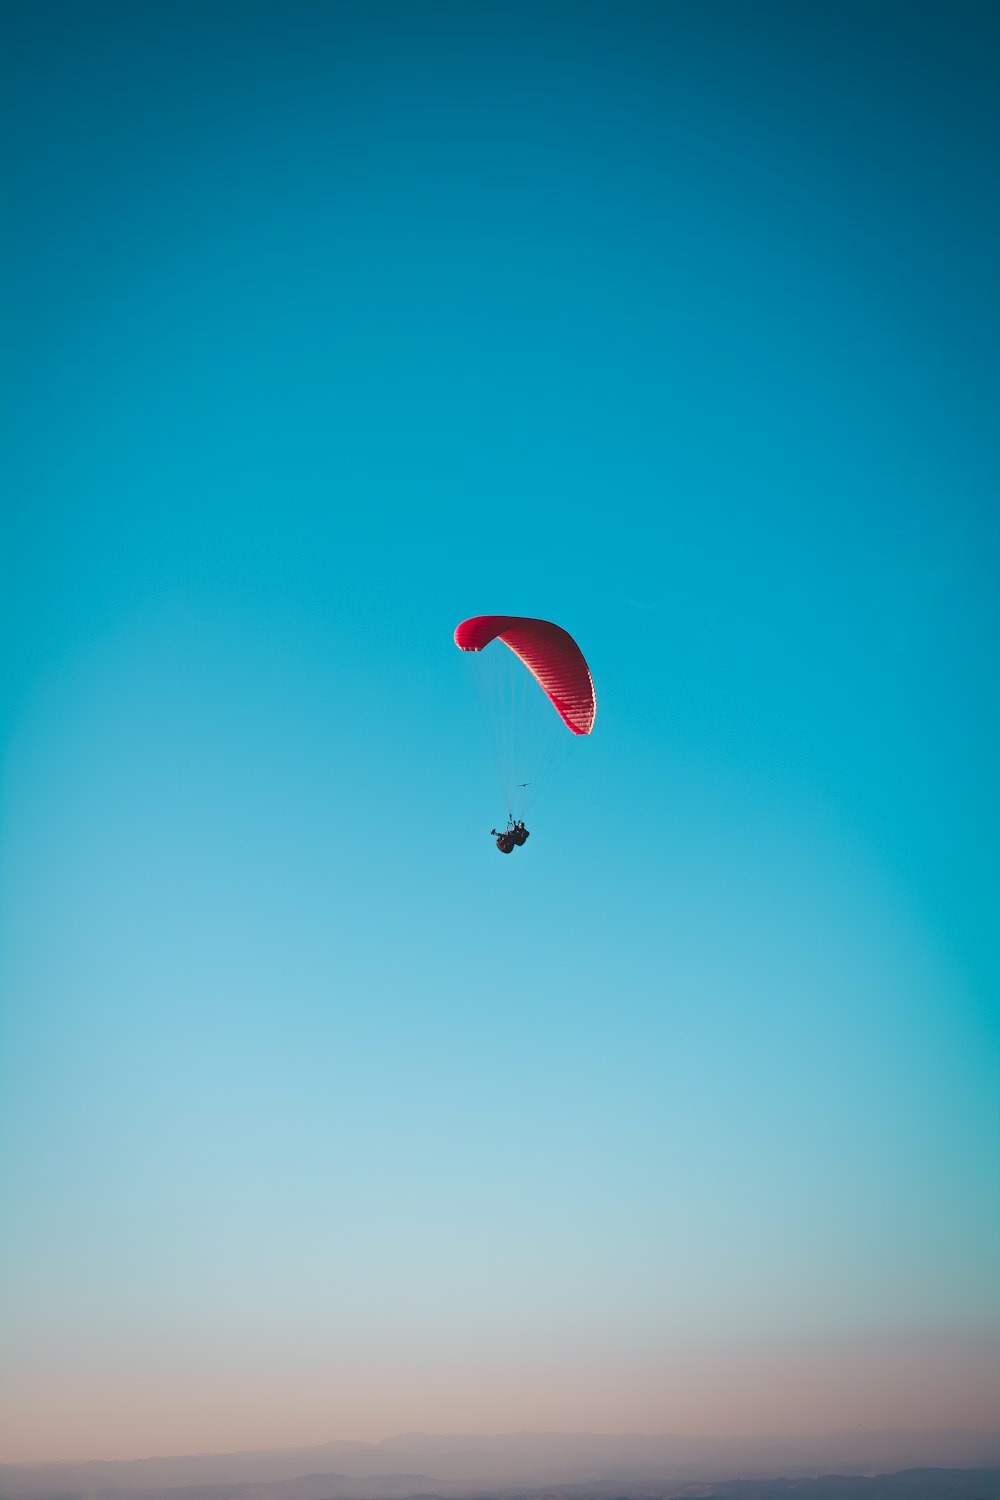 persona in paracadute rosso a mezz'aria